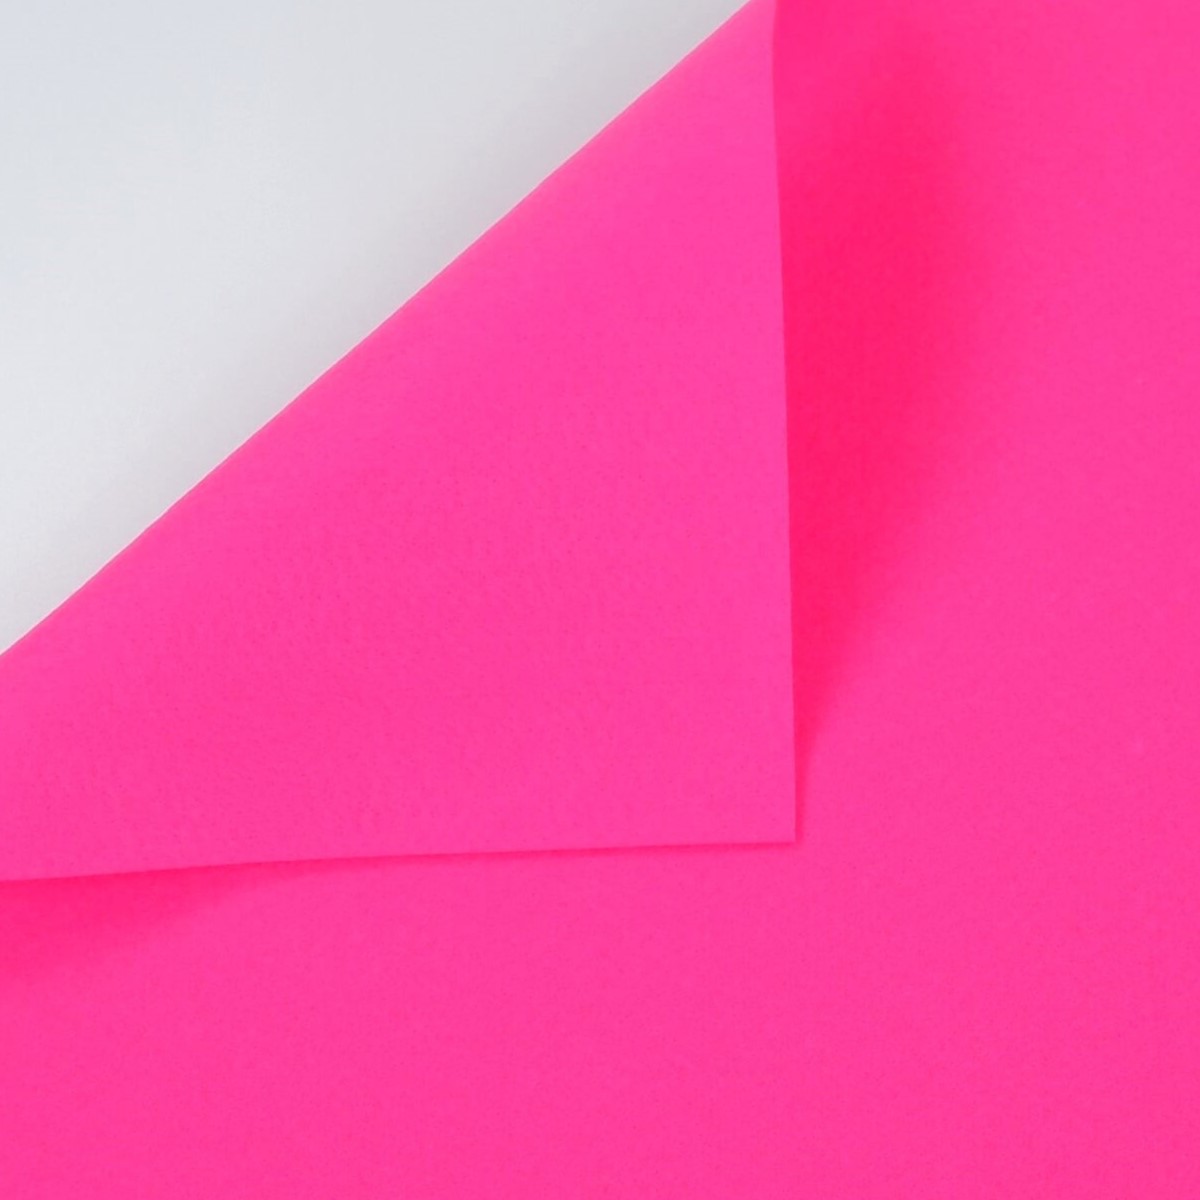 SULKY FELTY, waschbar, 25cm x 3m - Farbe 432 neon pink